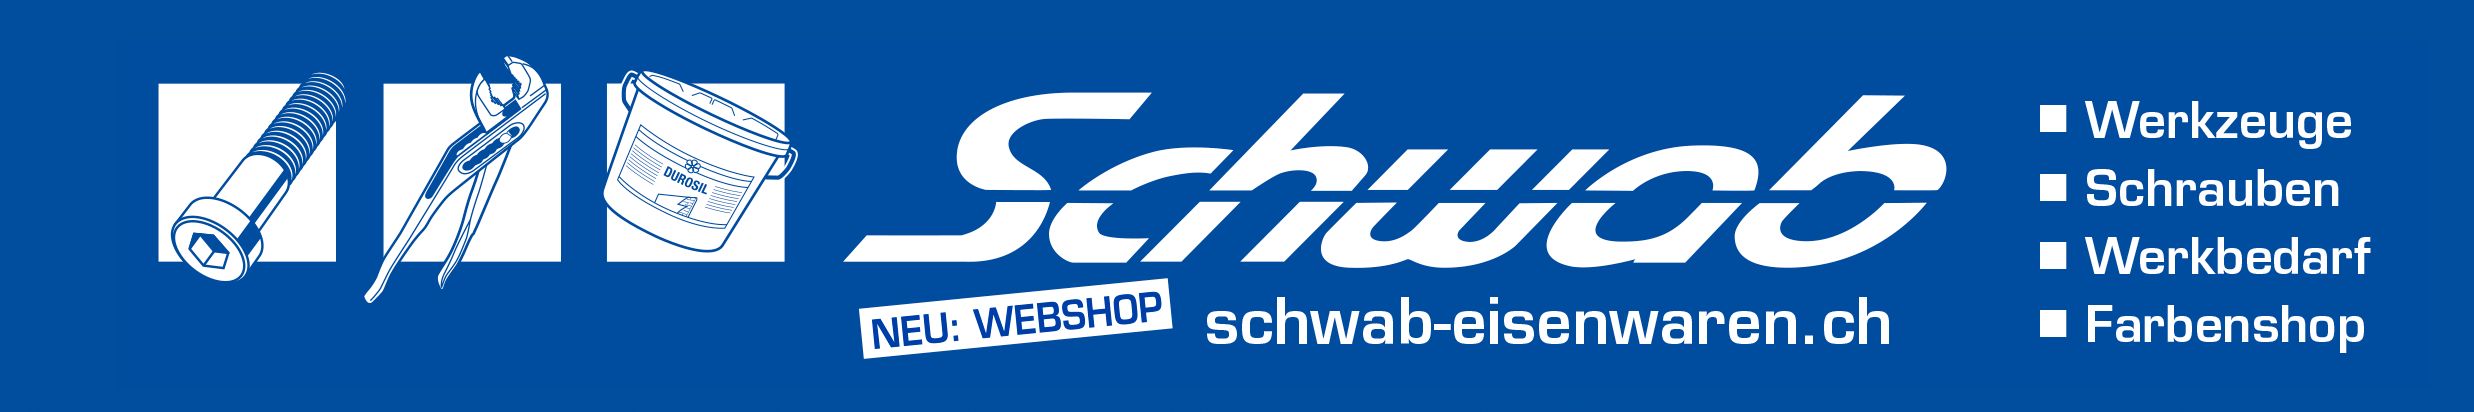 Logo Schwab mit Webshop130614